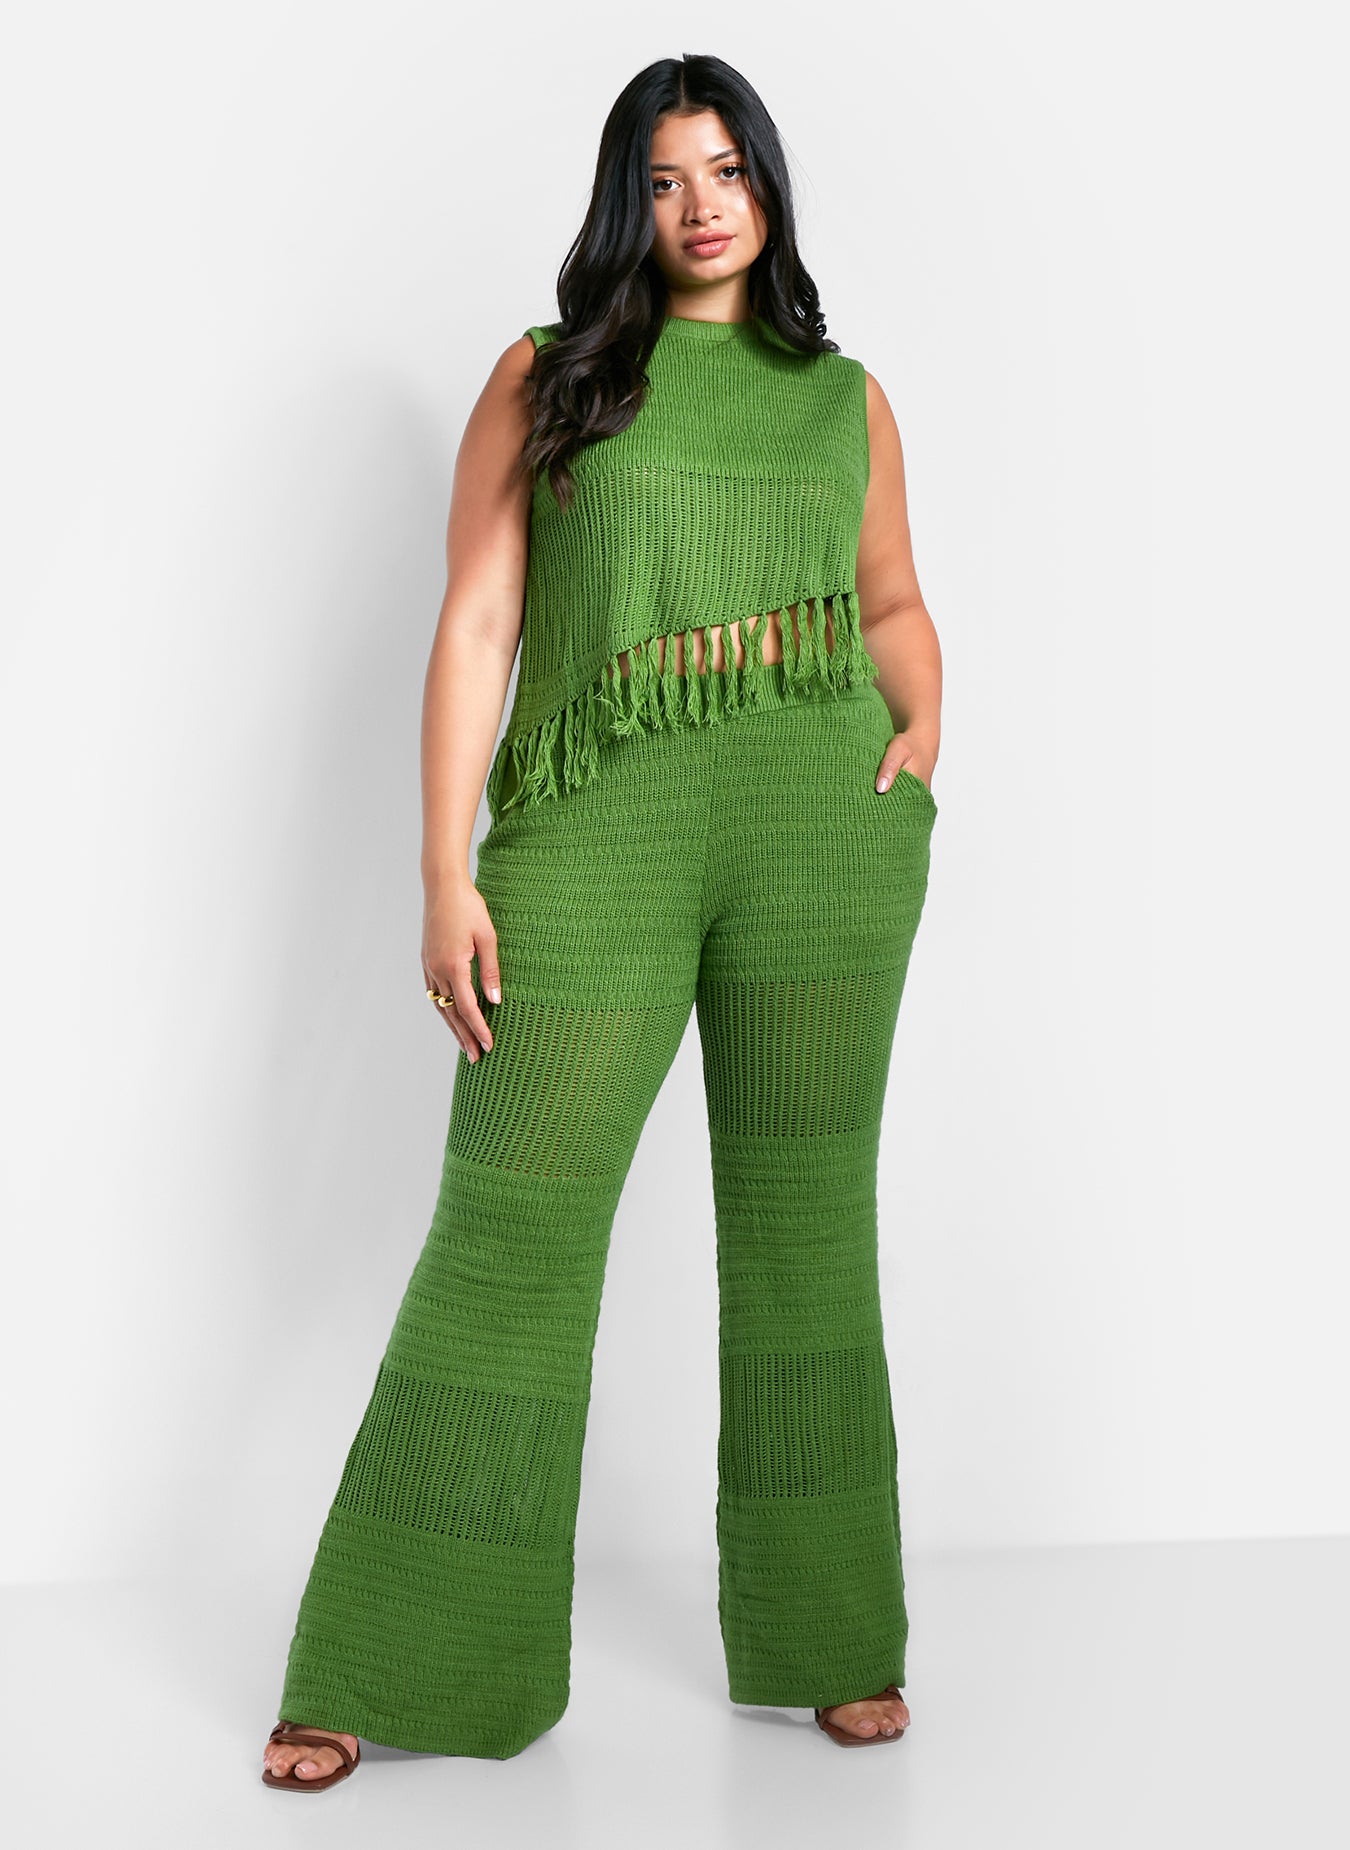 Shanti Crochet Bell Bottom Pants W. Pockets - Apple Green